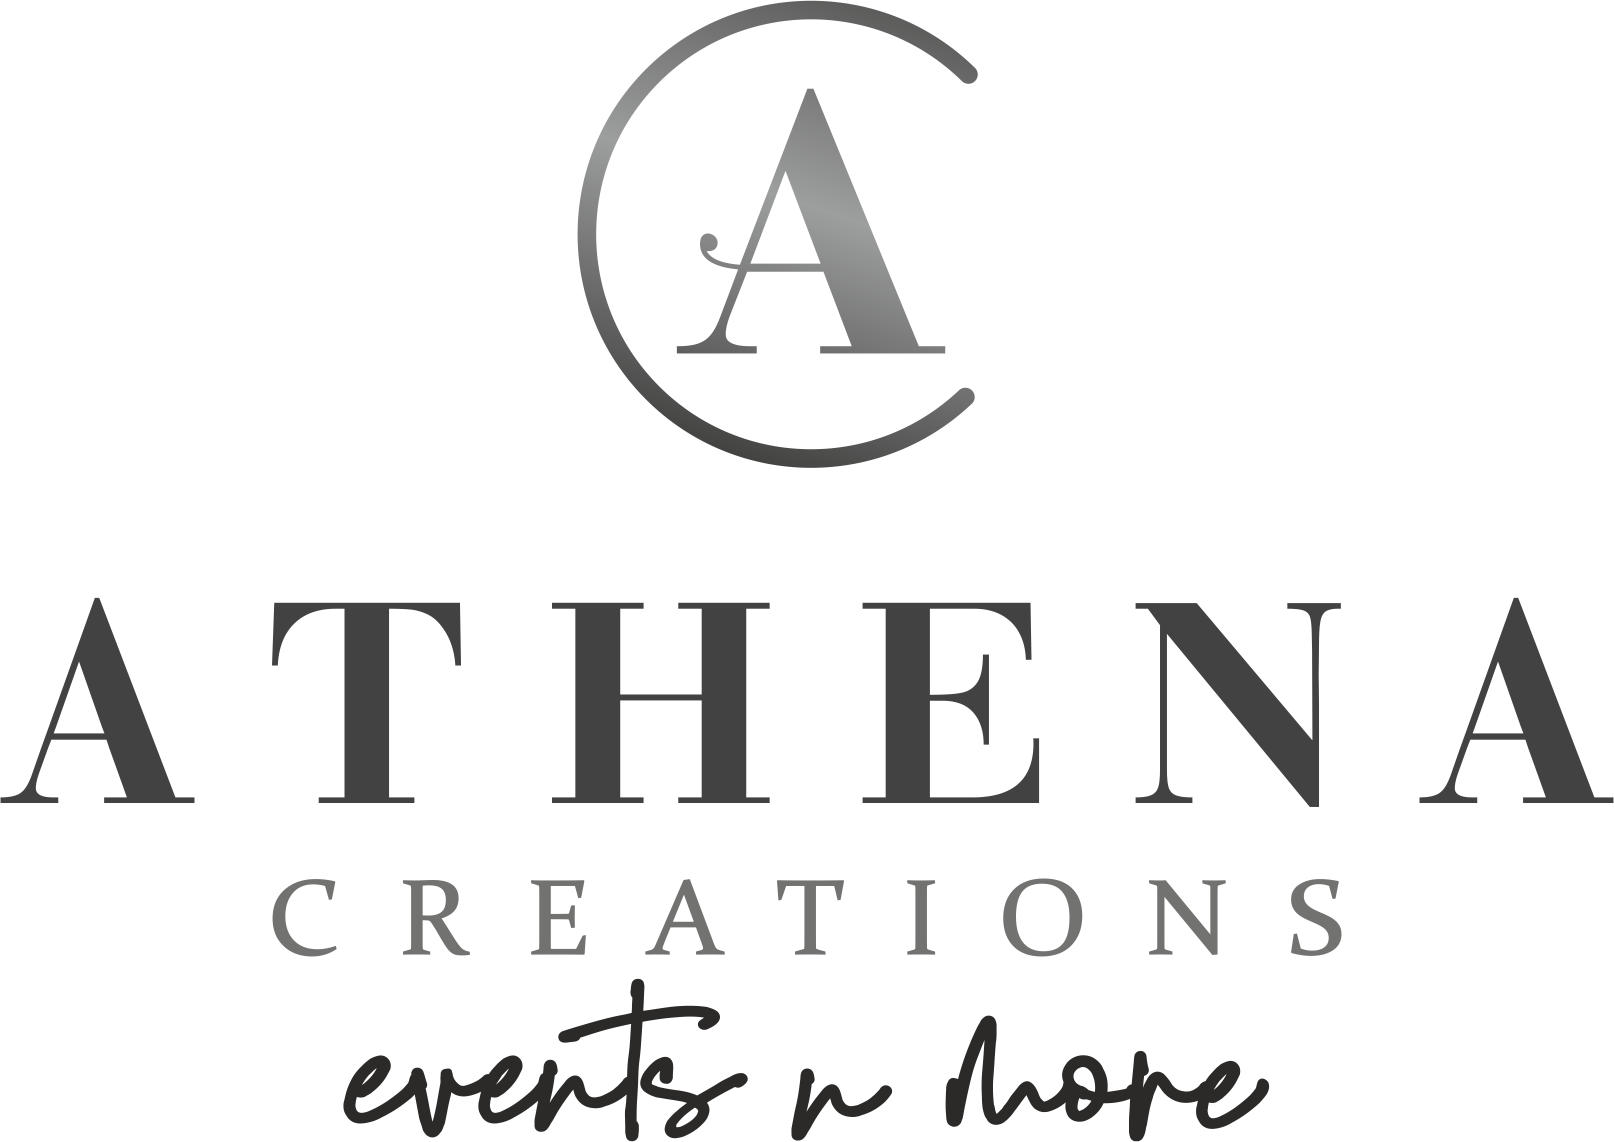 "ATHENA CREATIONS" 